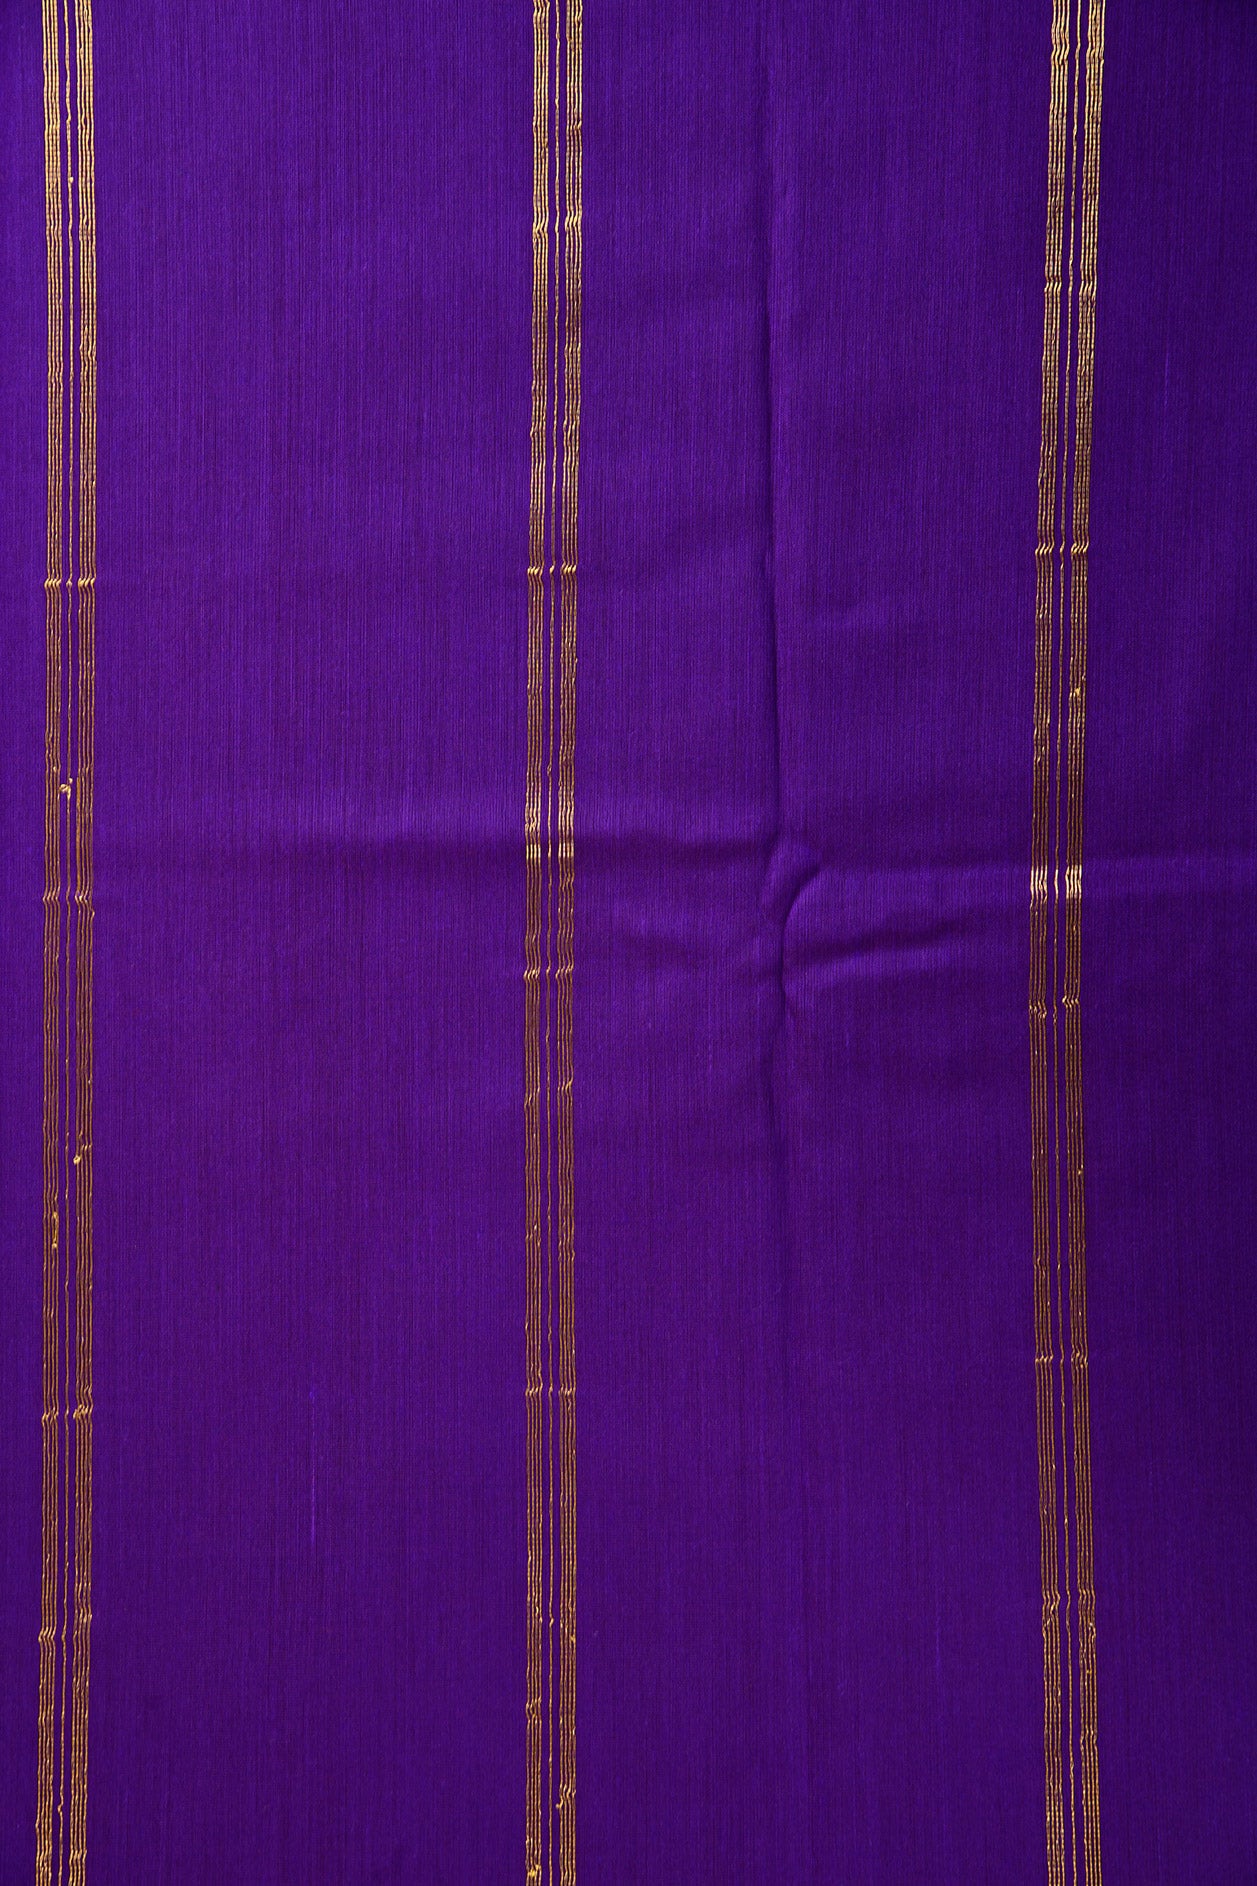 Rudraksh Running Border With Dark Violet Apoorva Art Silk Saree